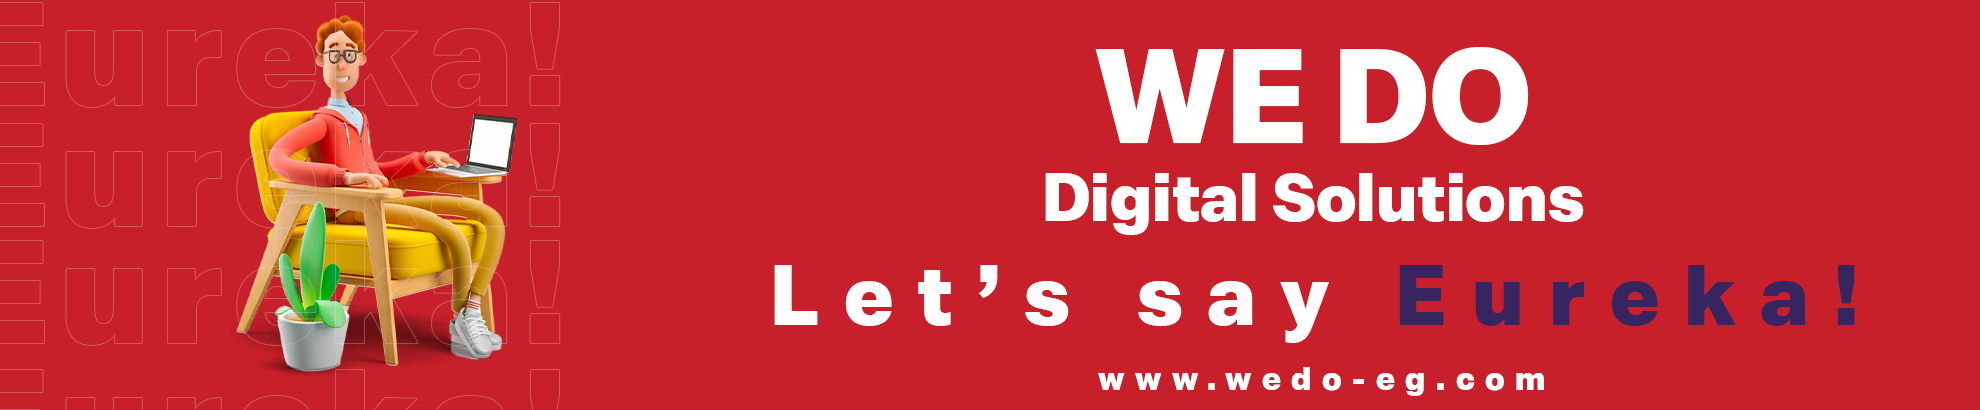 We Do - Digital Solutions's profile banner